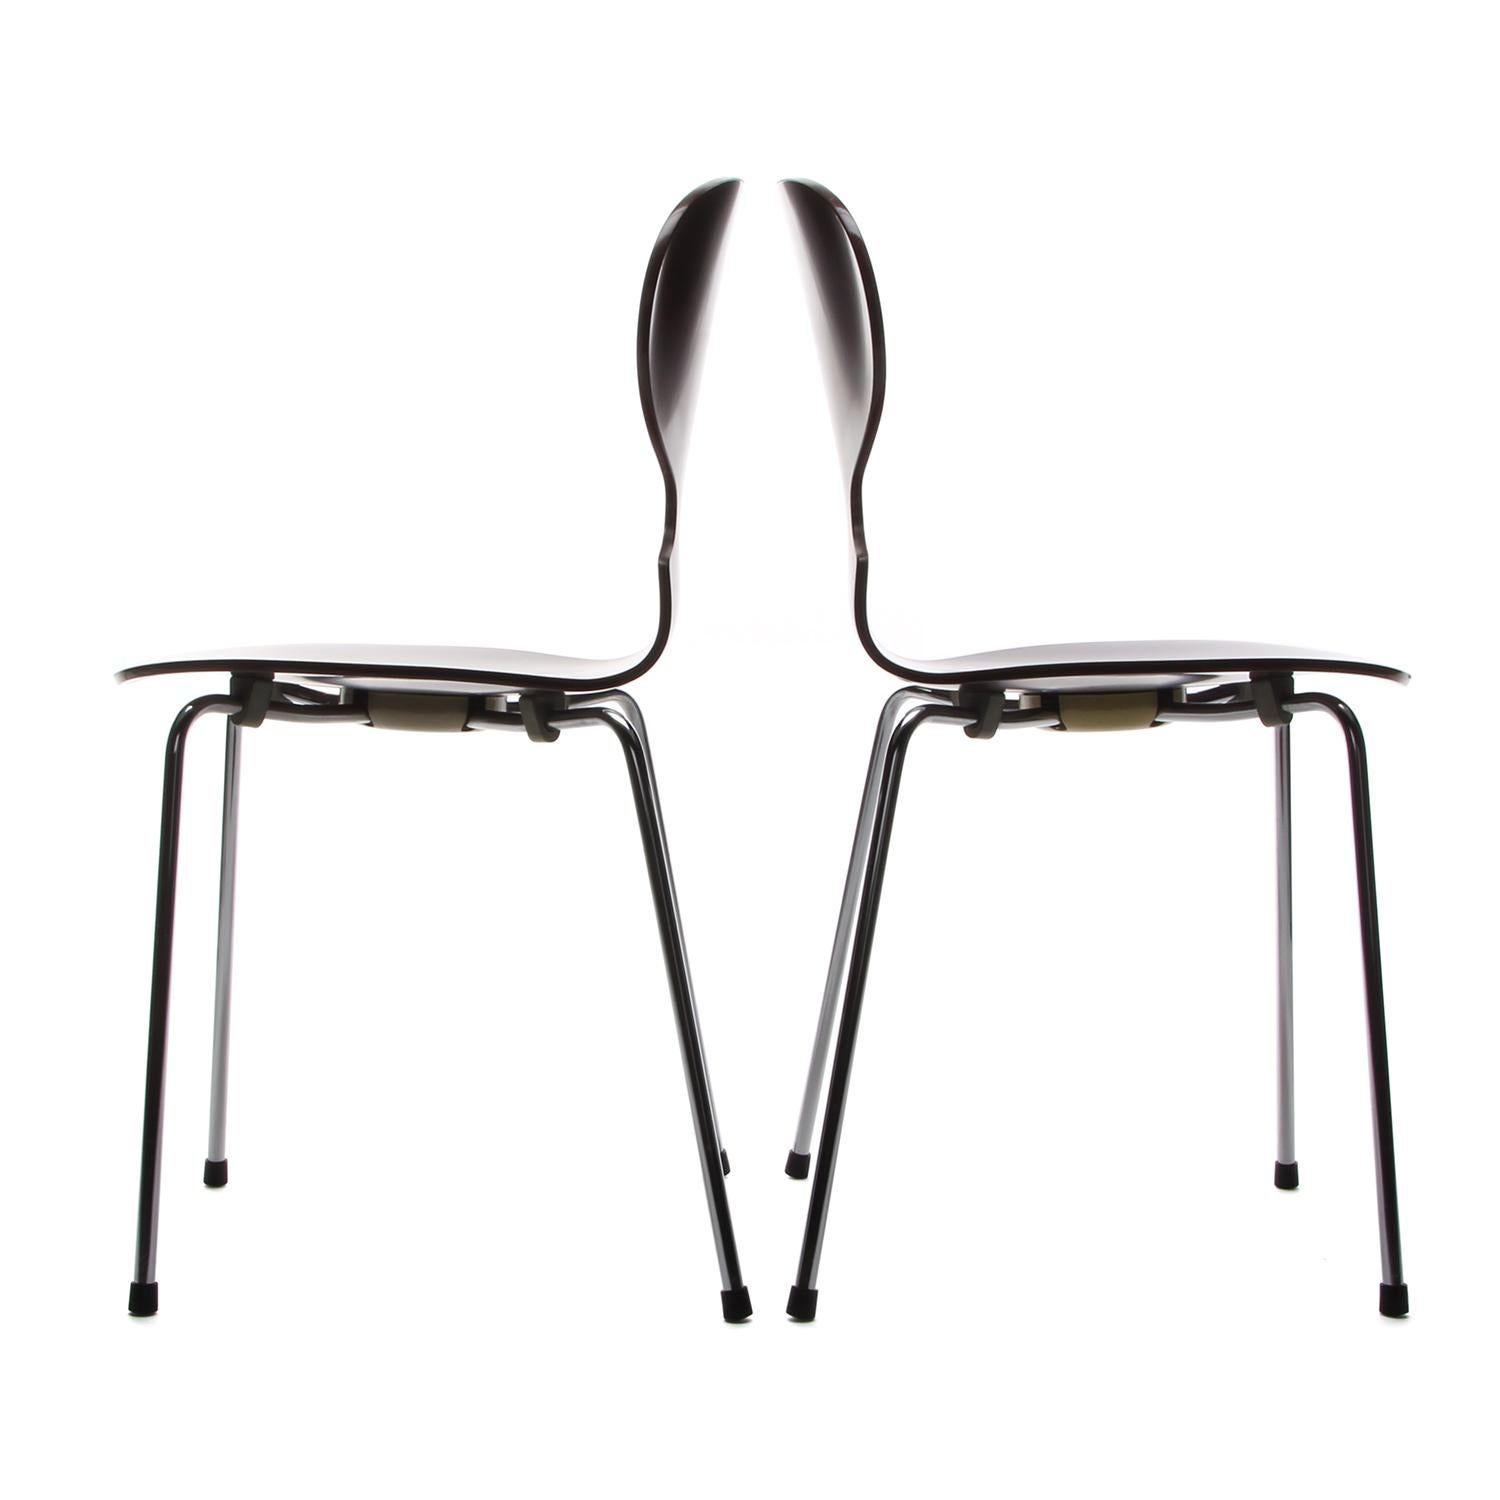 Scandinavian Modern Ant Chairs (Pair), Model 3100 Chairs by Arne Jacobsen for Fritz Hansen in 1952